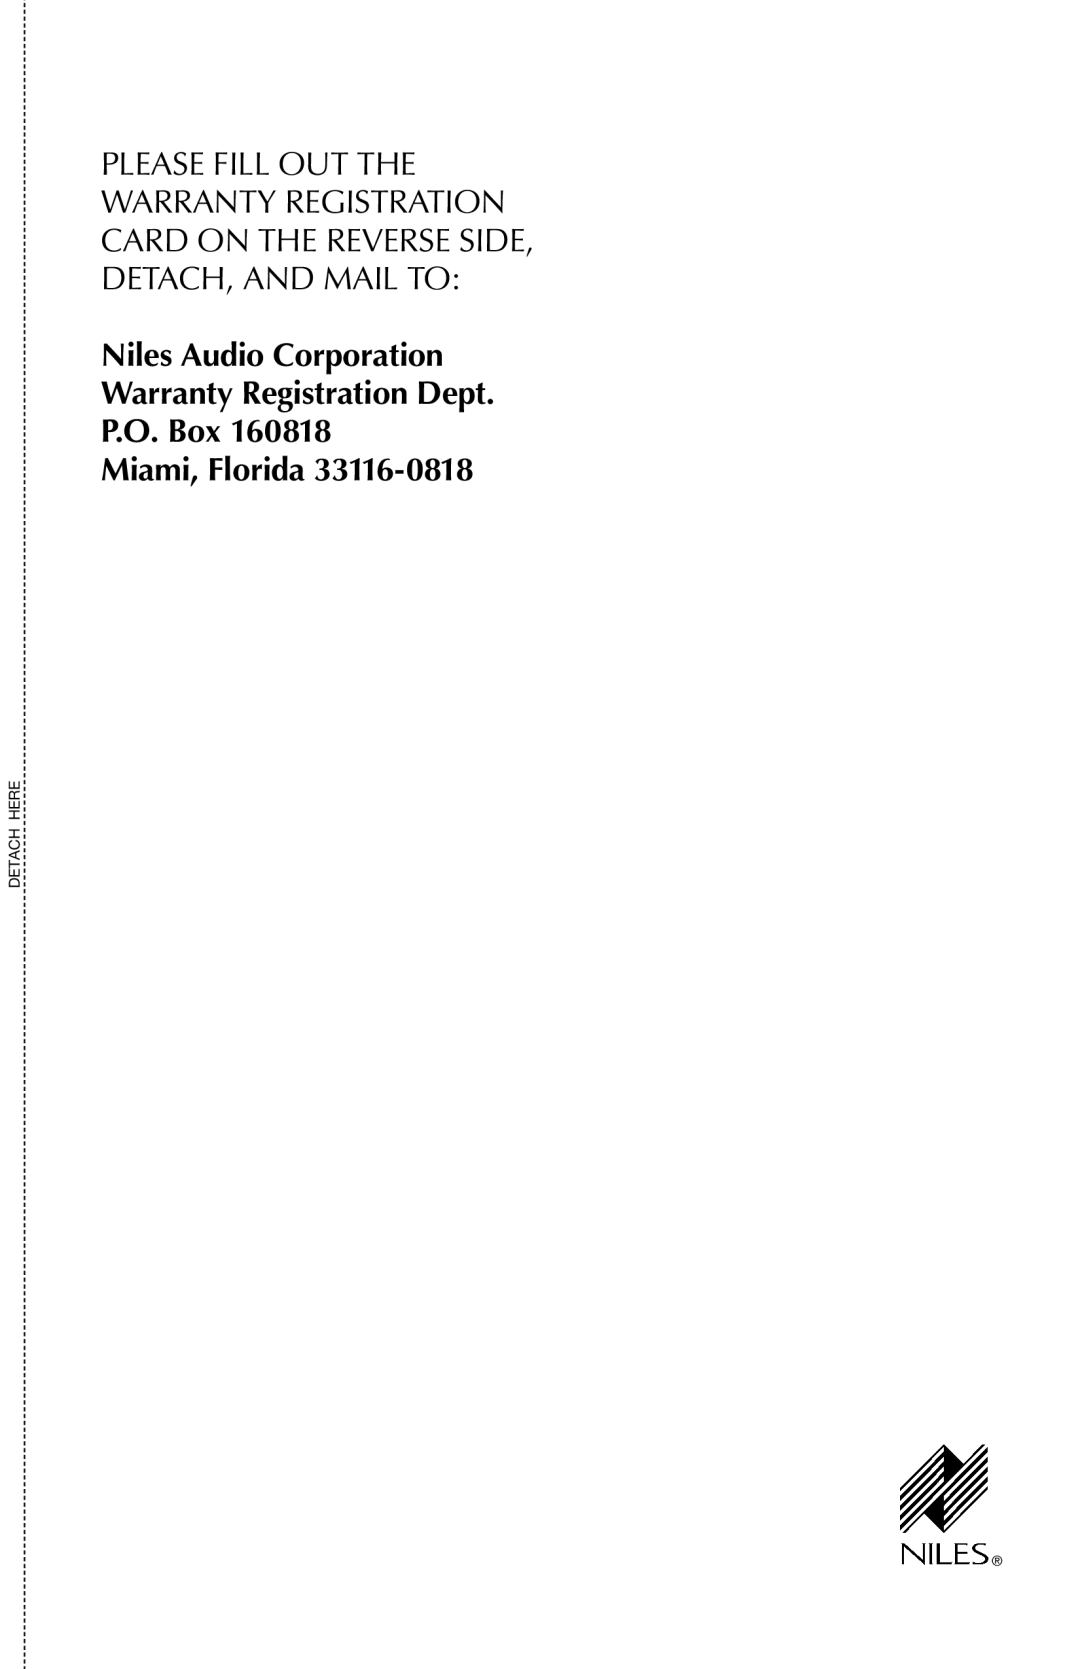 Niles Audio PSW8 manual Niles Audio Corporation, Warranty Registration Dept P.O. Box, Miami, Florida, Detach Here 